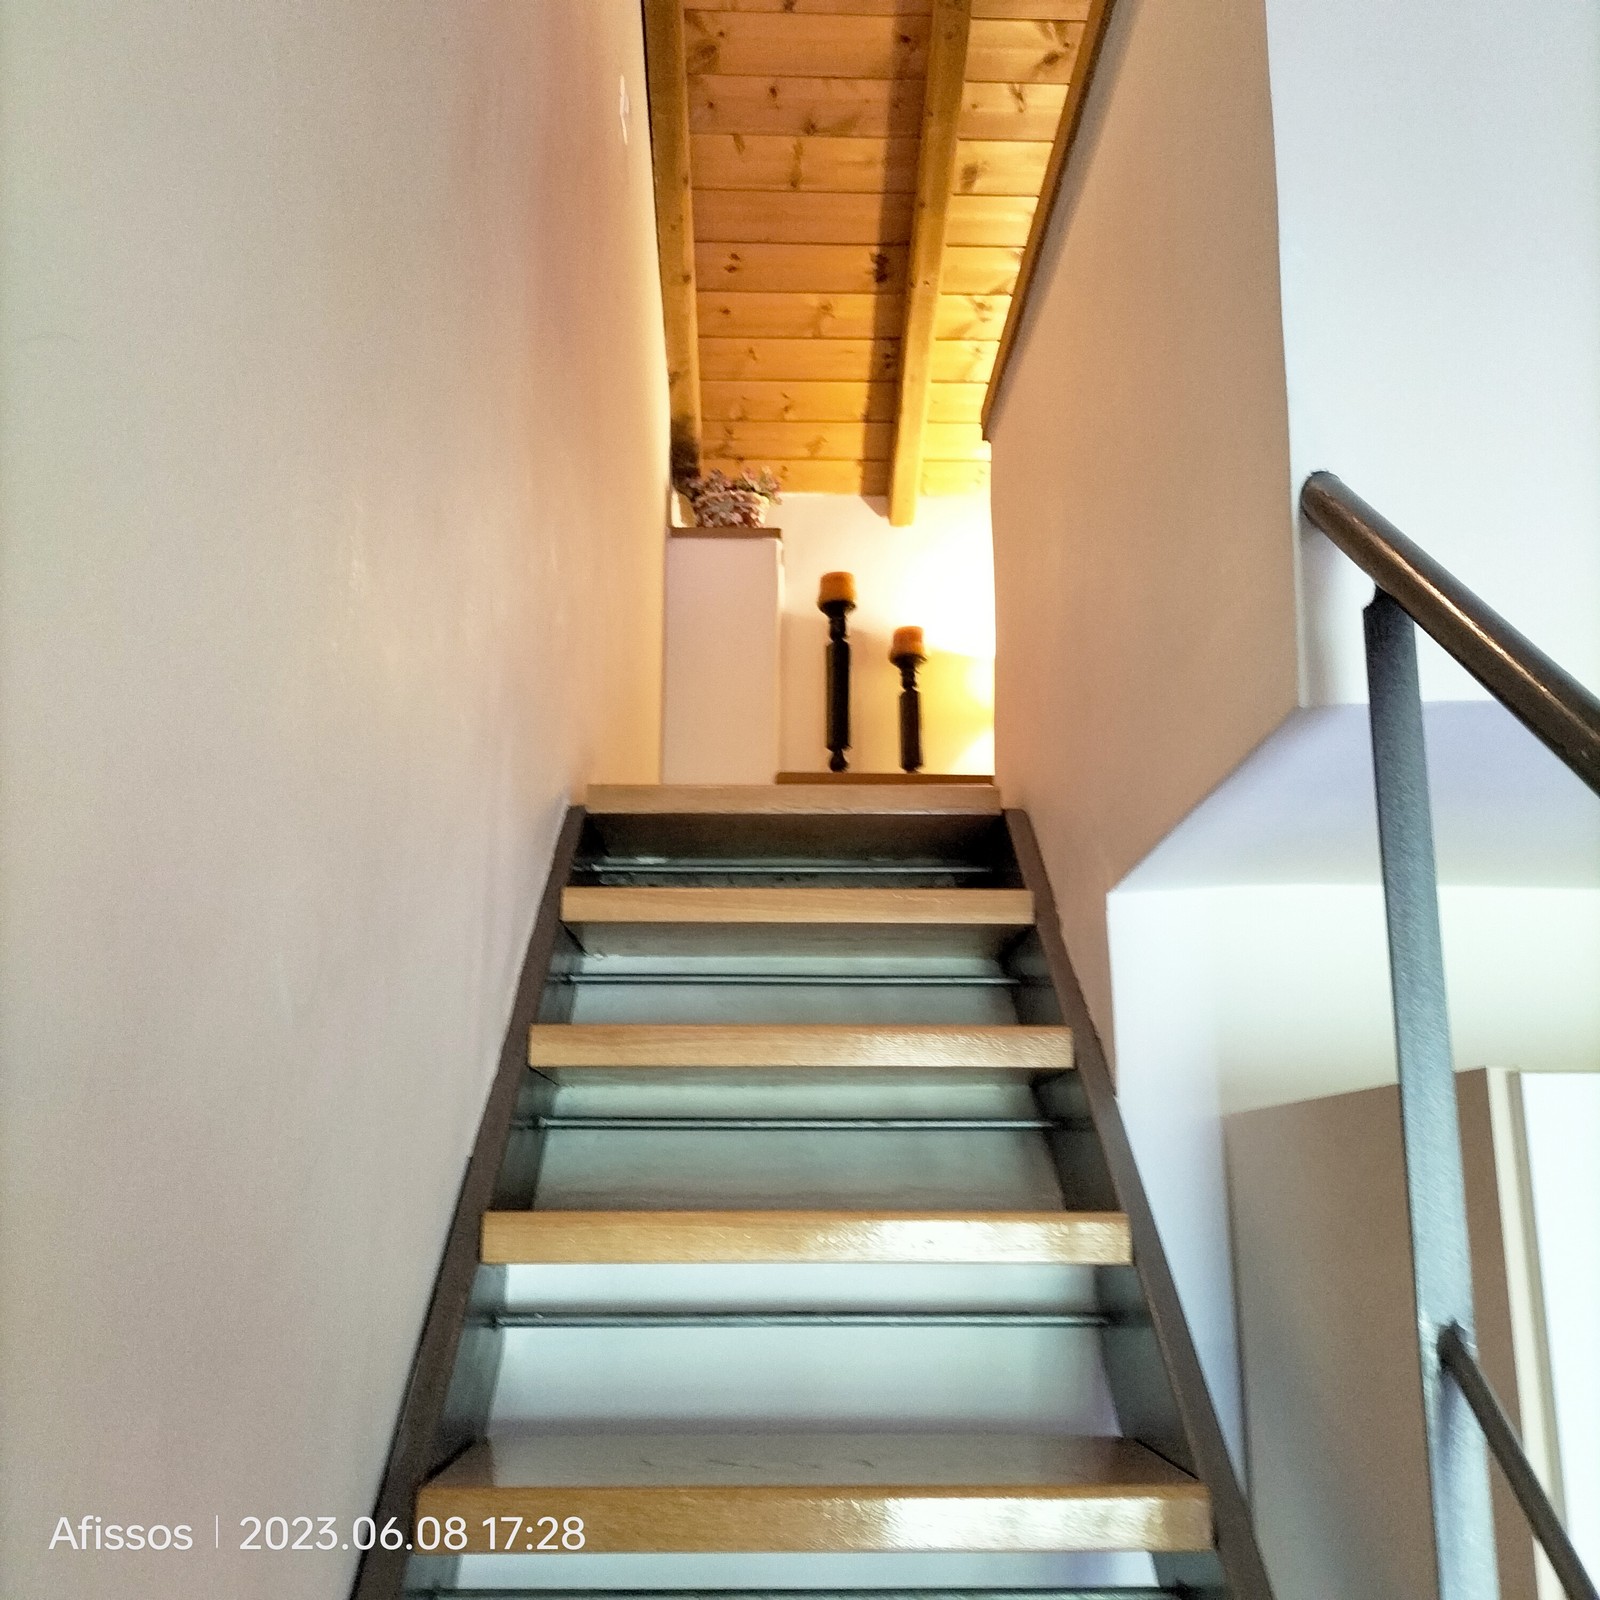 VillasOnTheRock Afissos - Loft Apartment 2